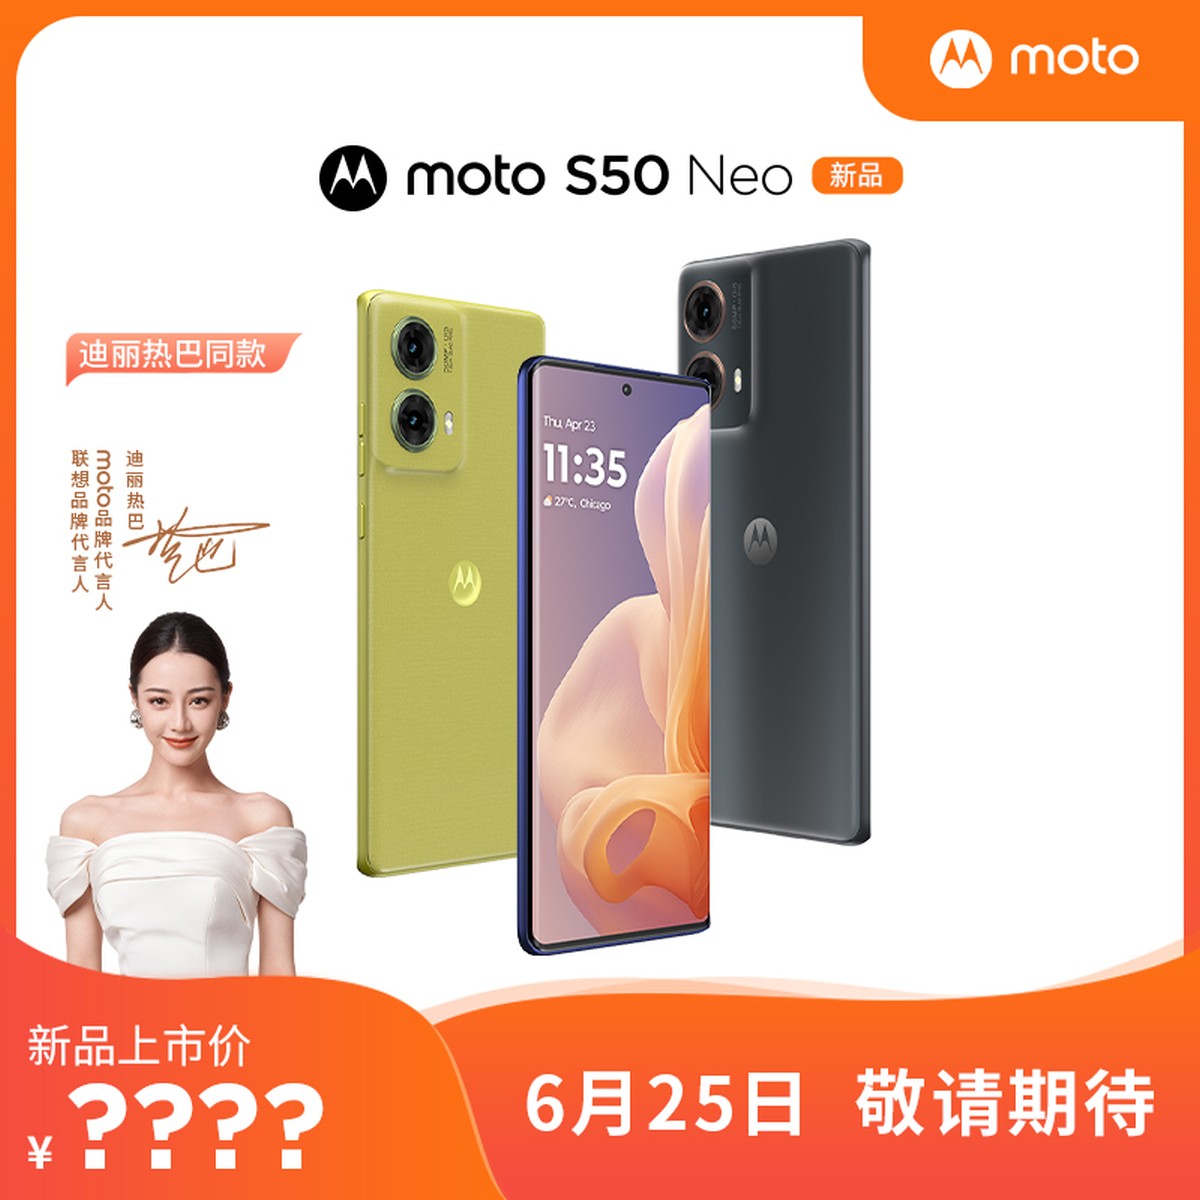 Motorola Moto S50 Neo data premiery